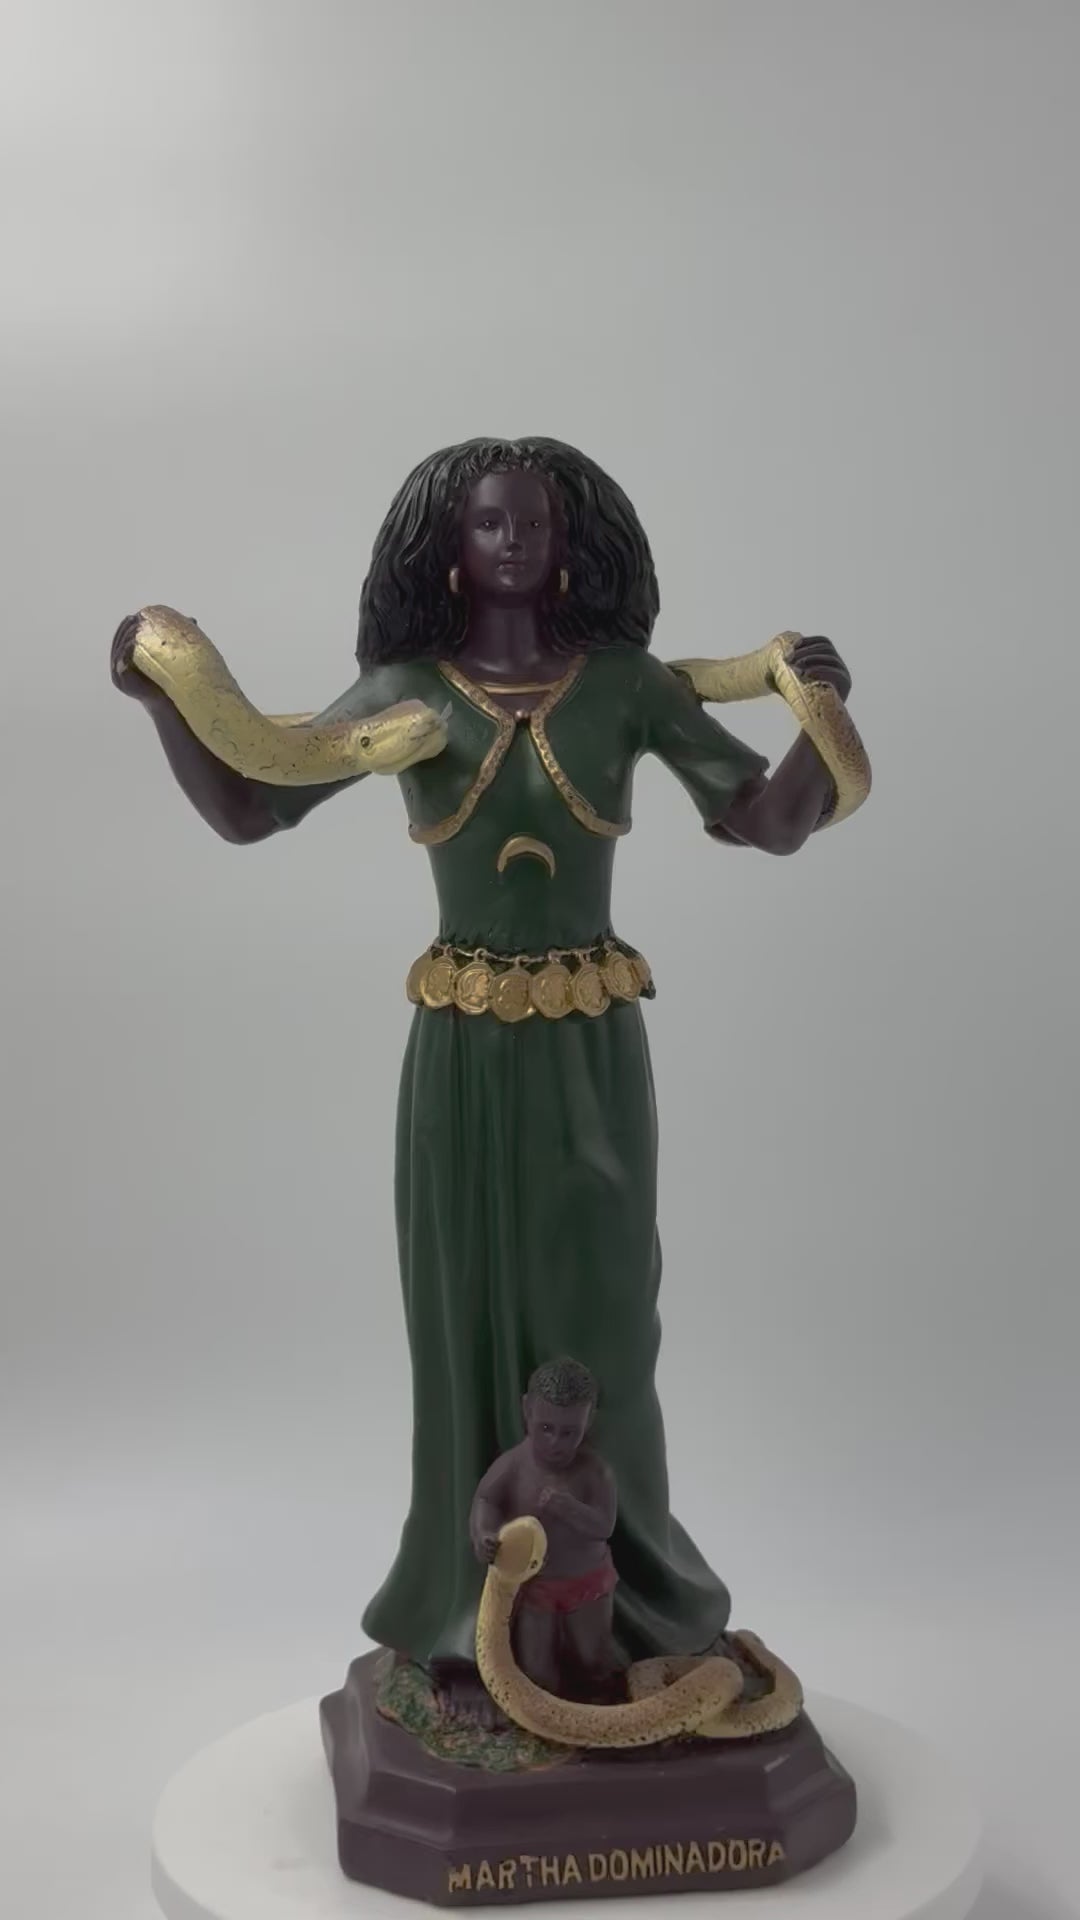 MARTHA DOMINADORA GREEN (standing) -Statue 12.5"